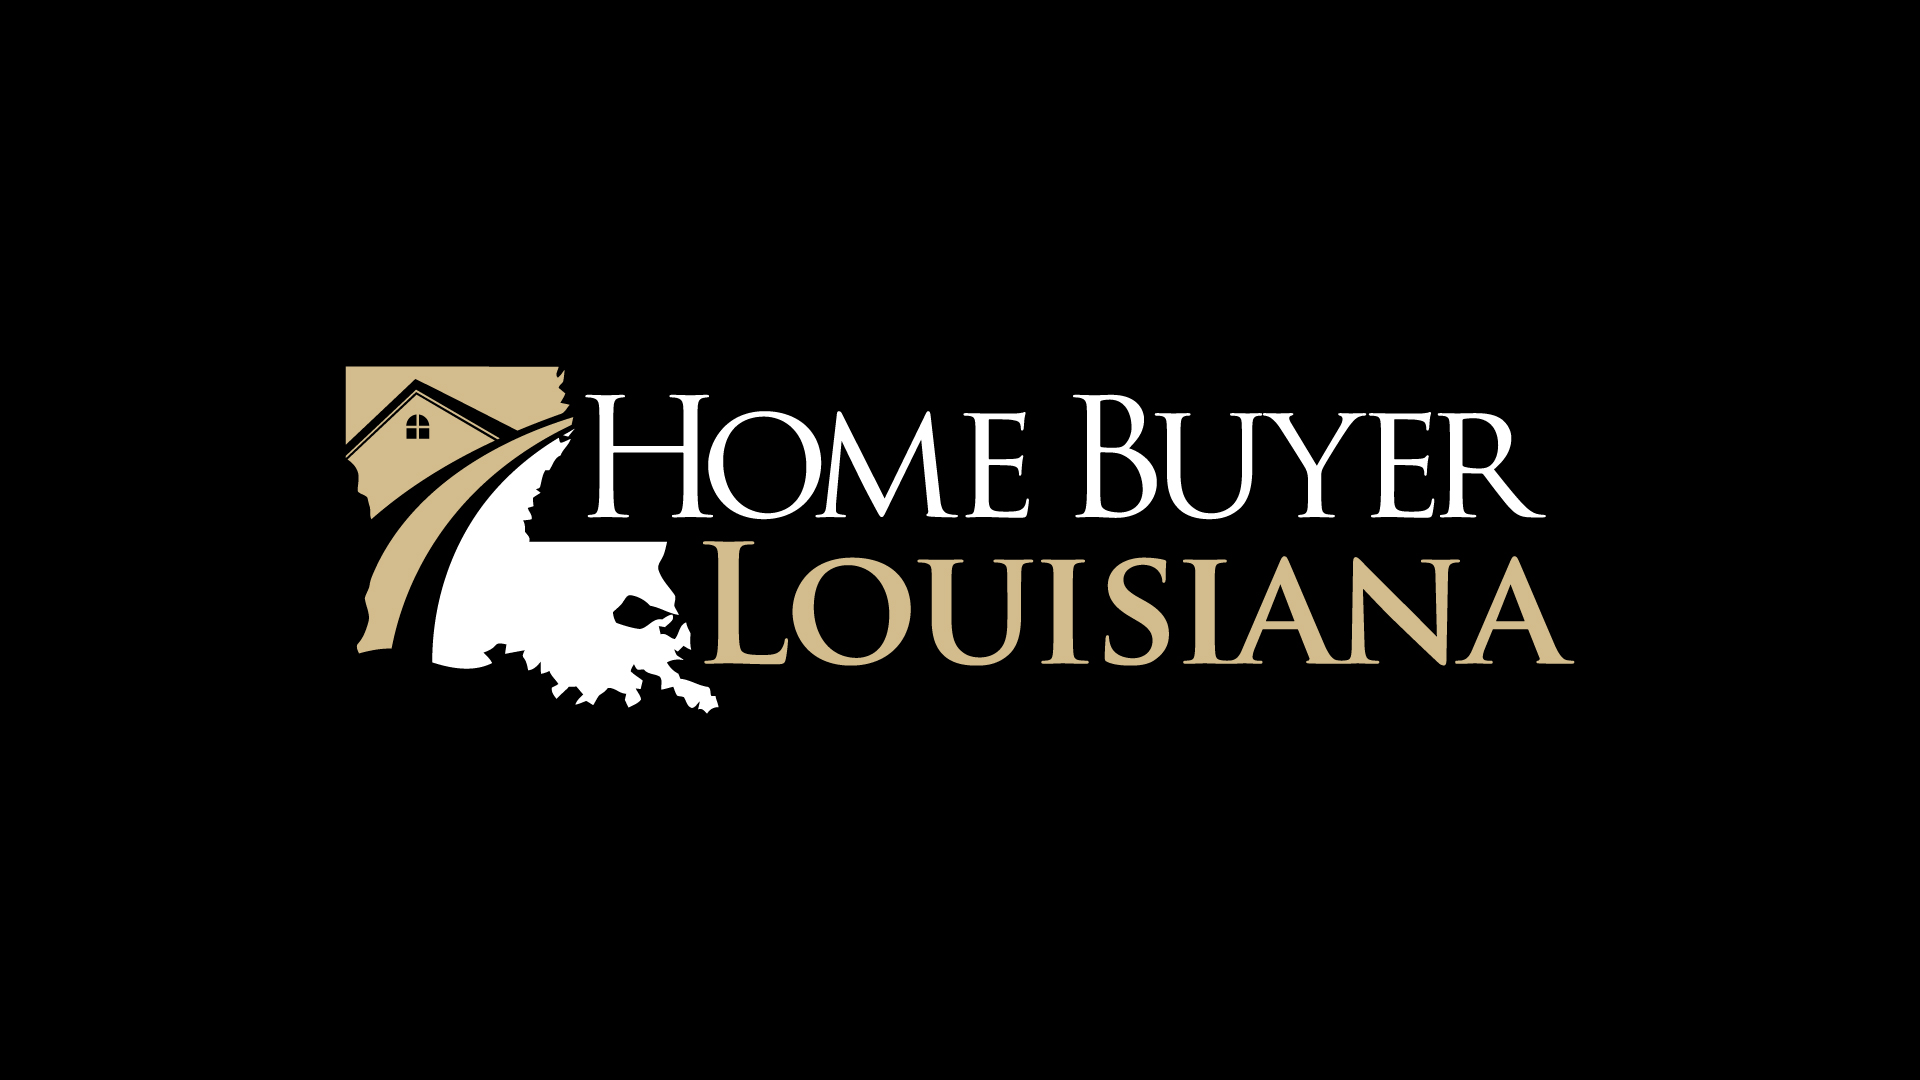 Home Buyer Louisiana